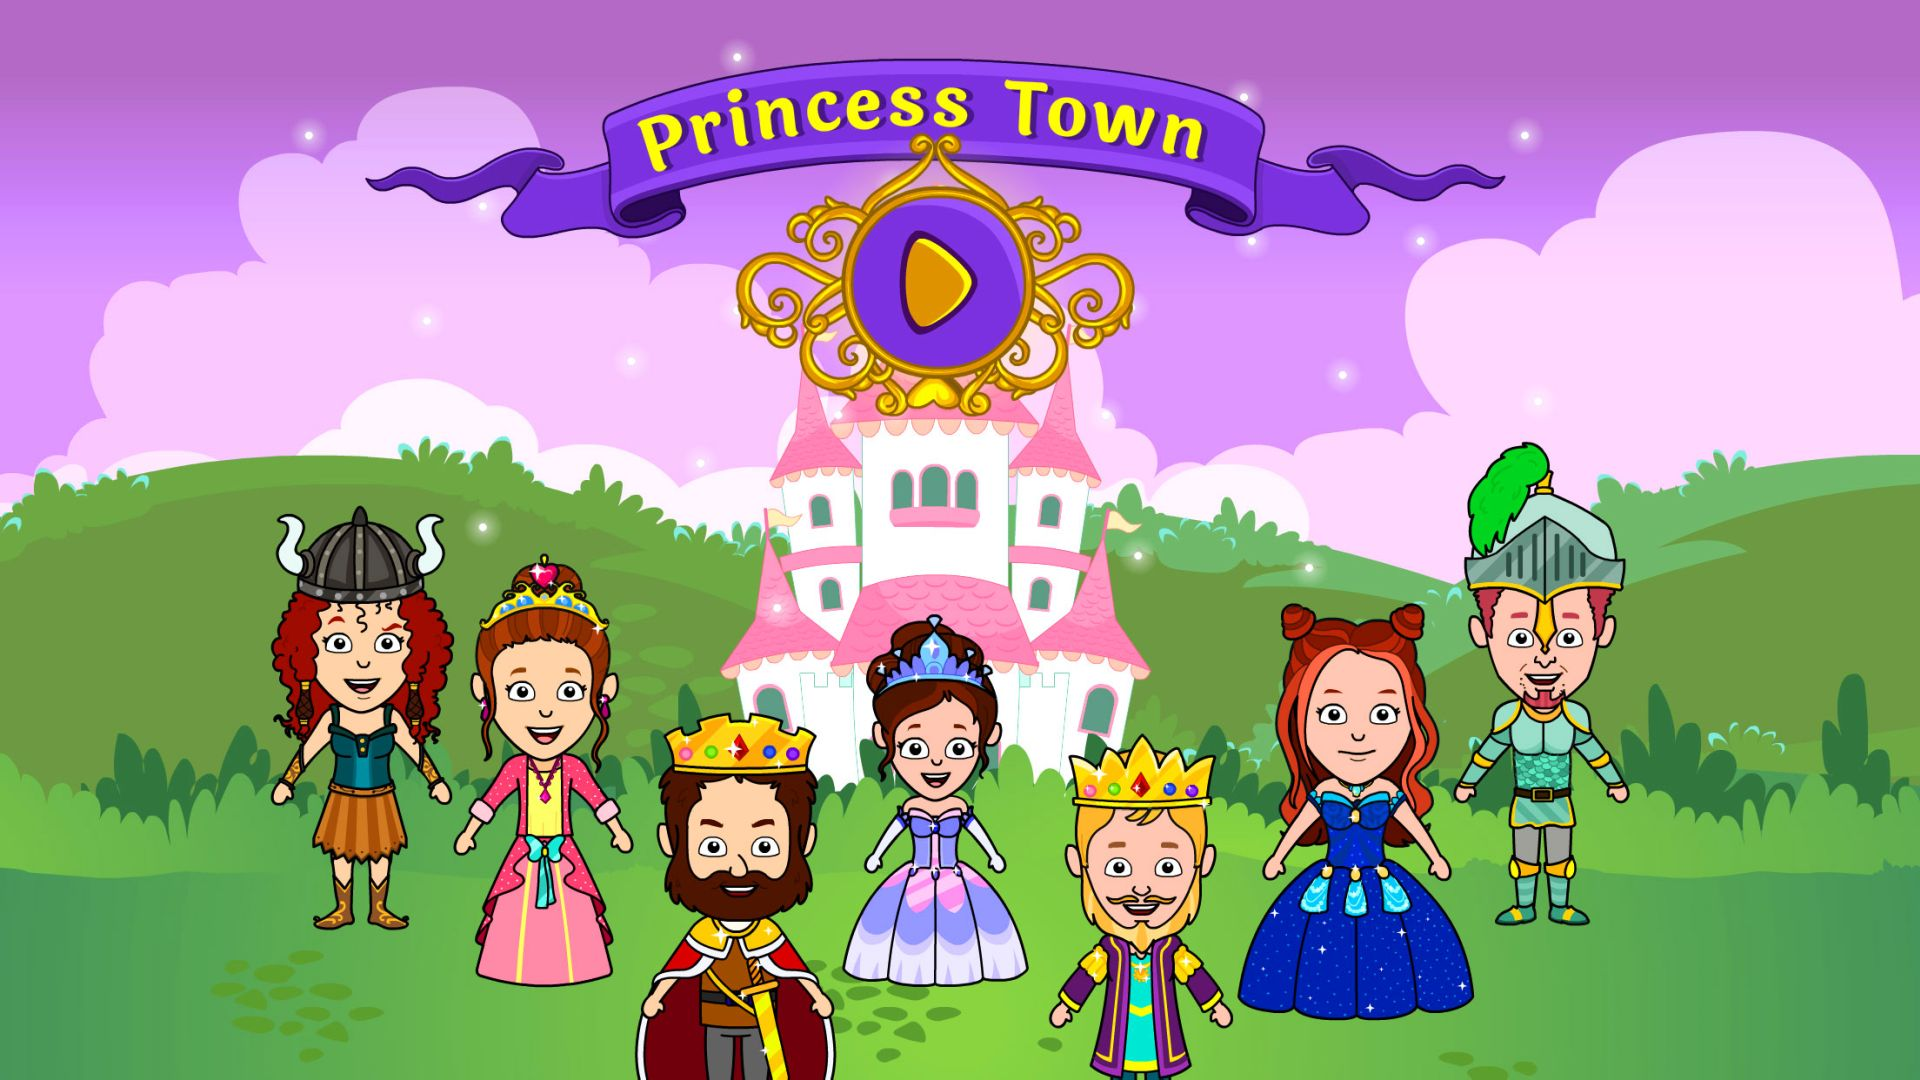 Tizi Town - My Princess Dream Home Castle for Girls & Boys